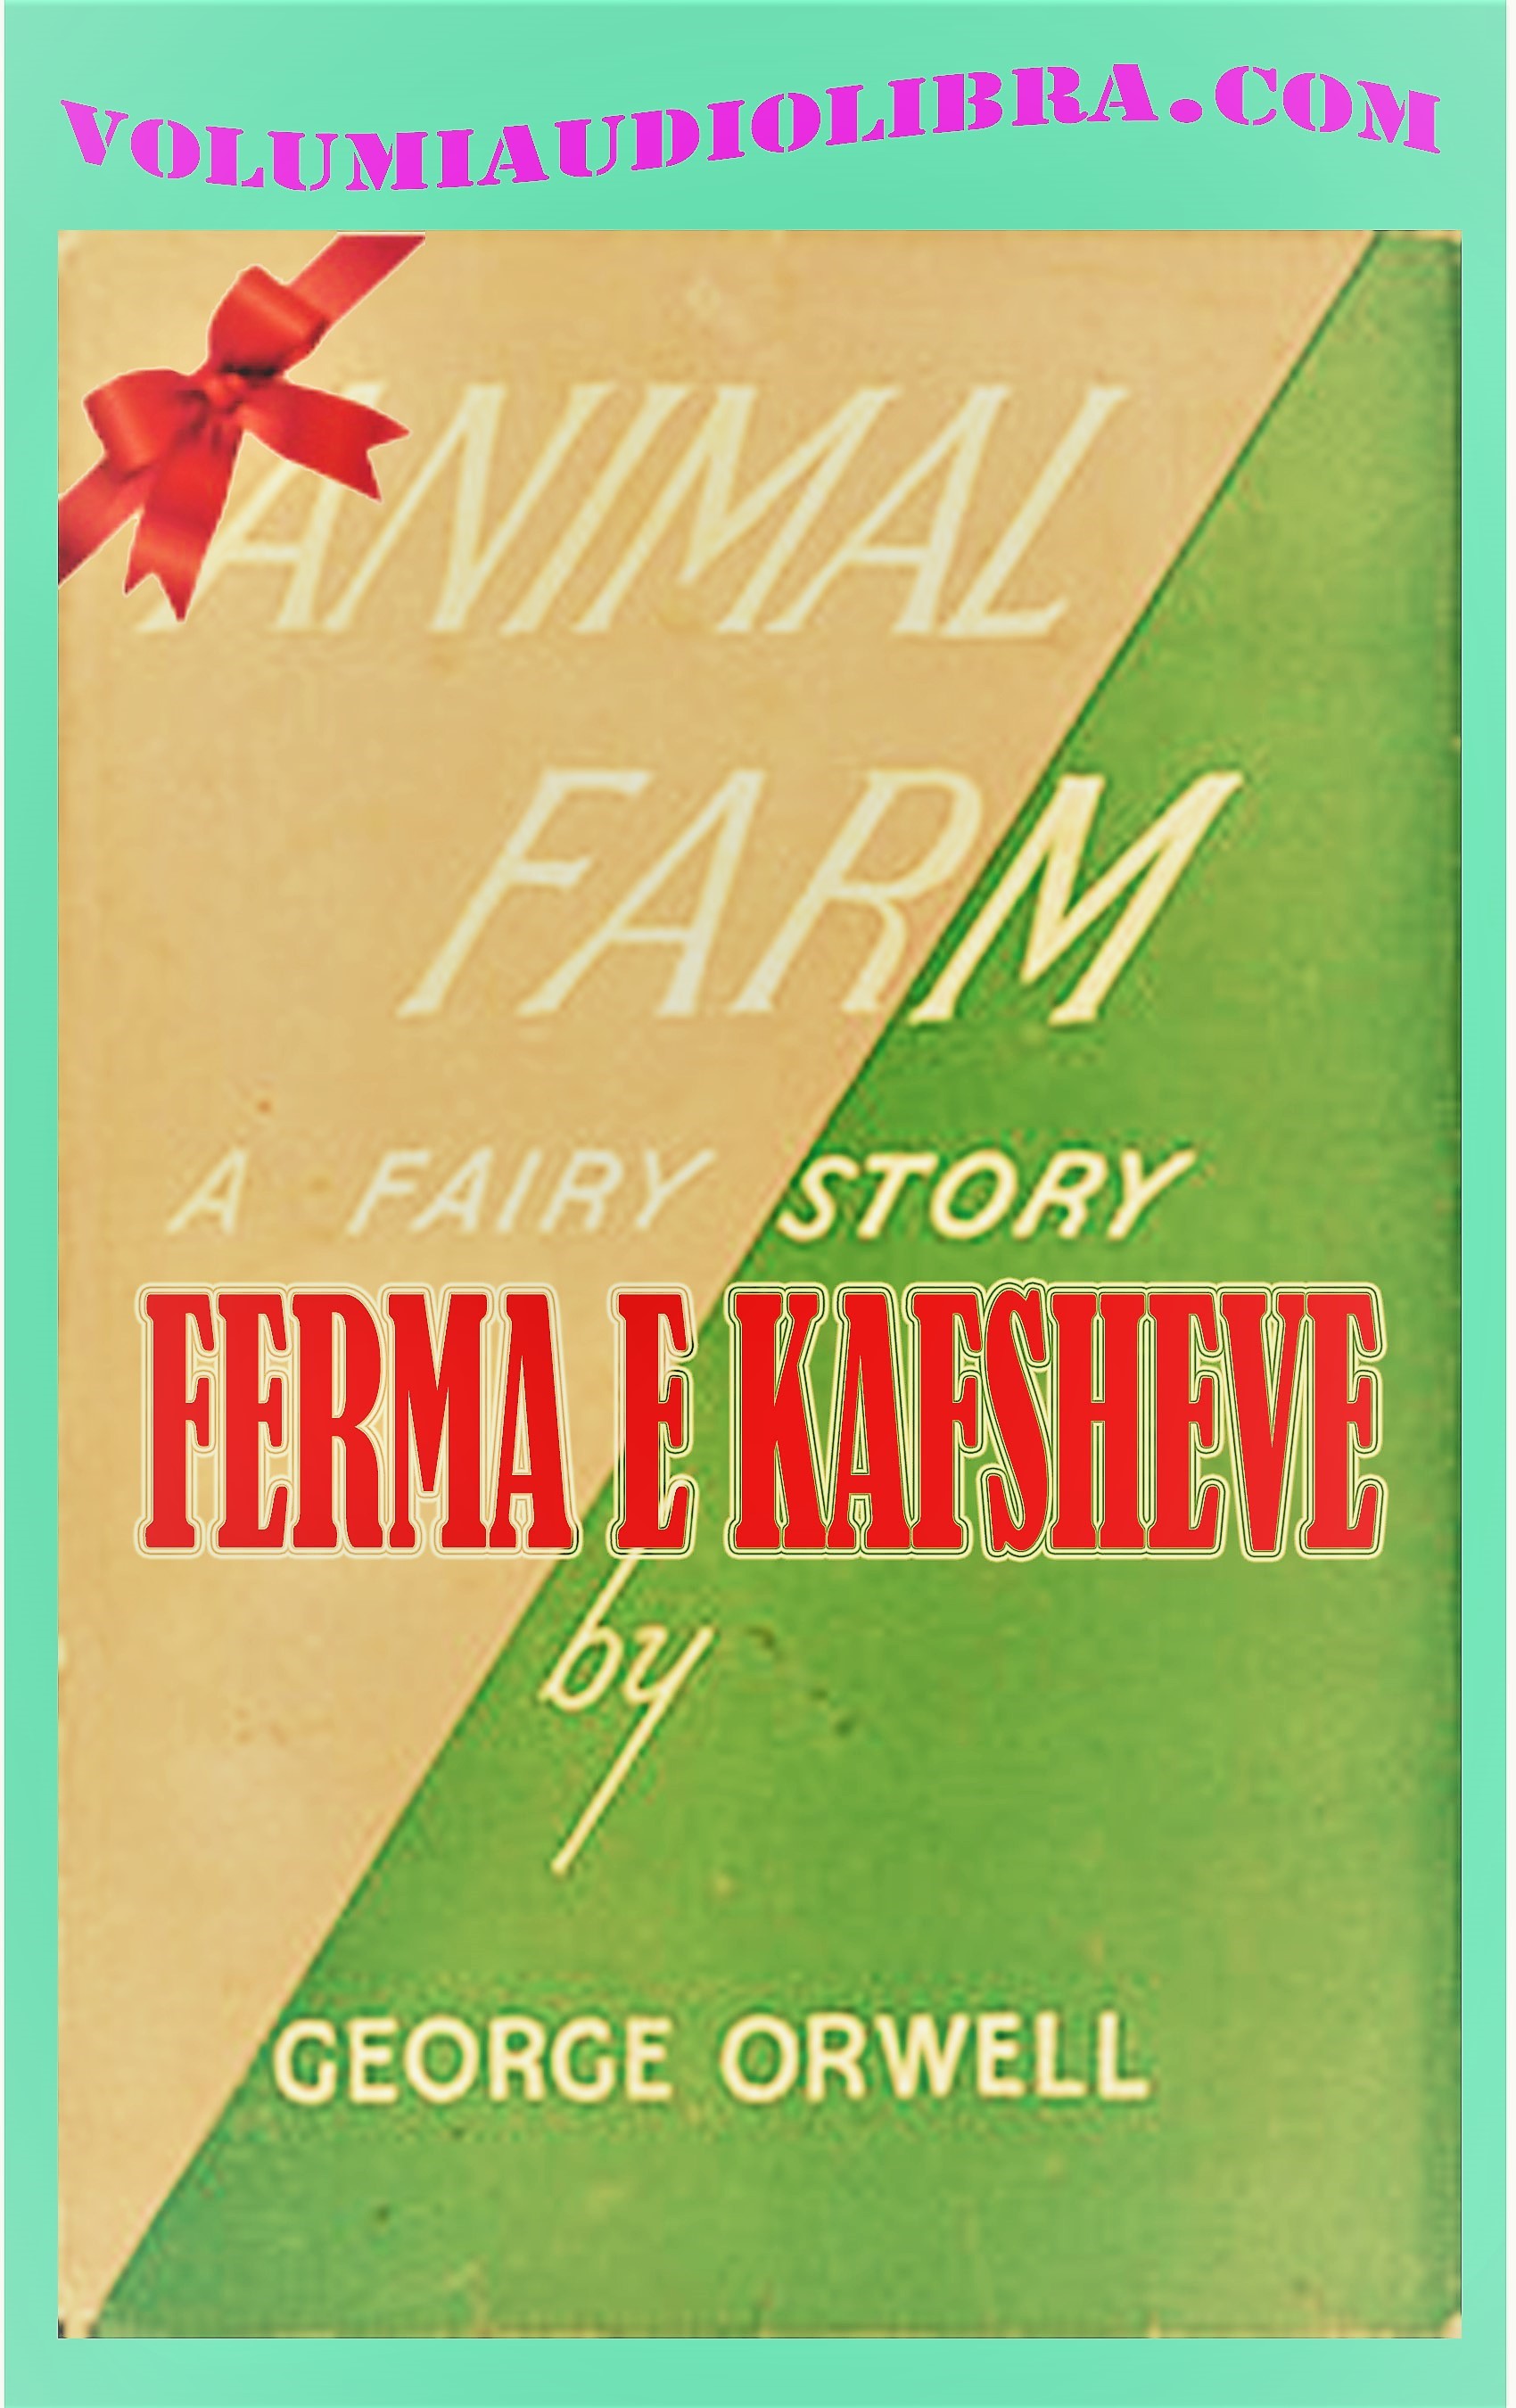 Animal farm